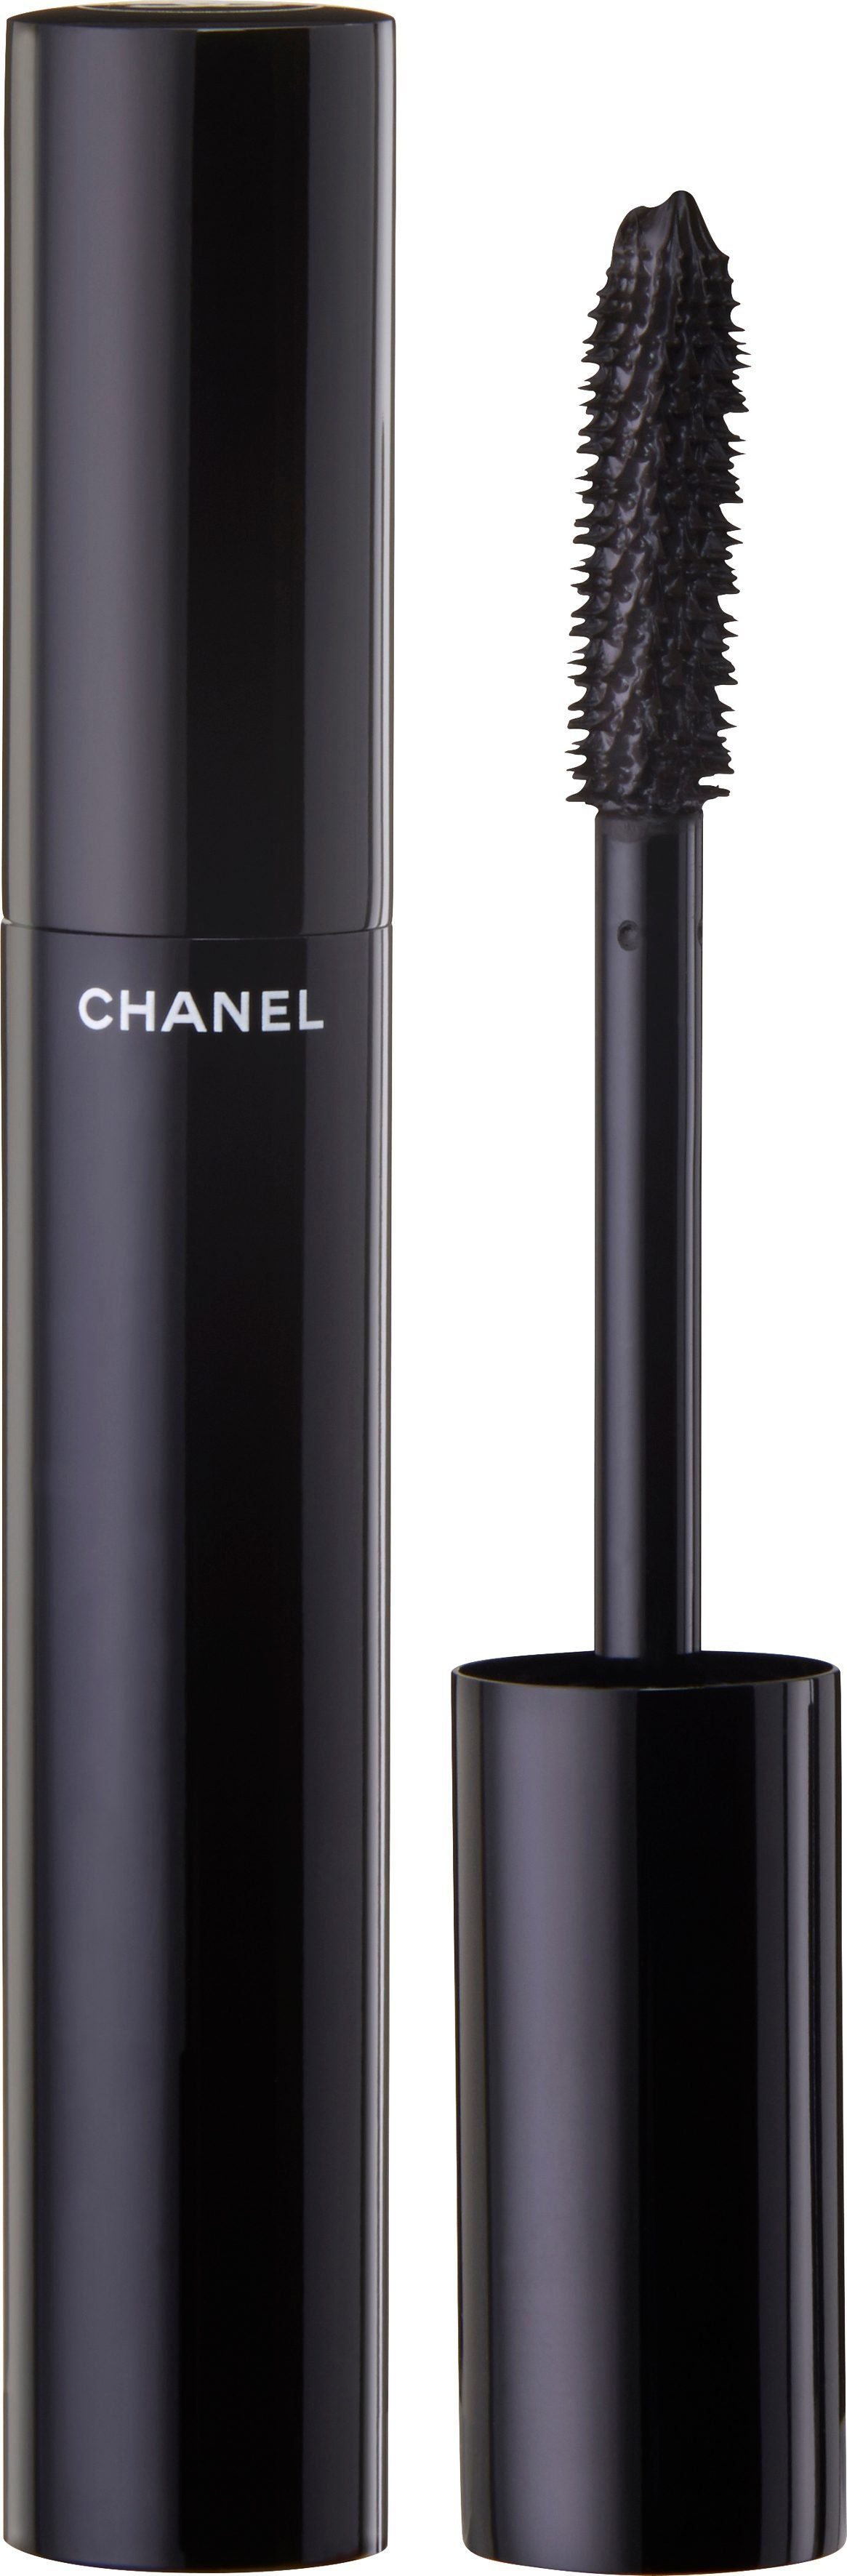 CHANEL Mascara Volume Chanel, Le de Bürste Innovative